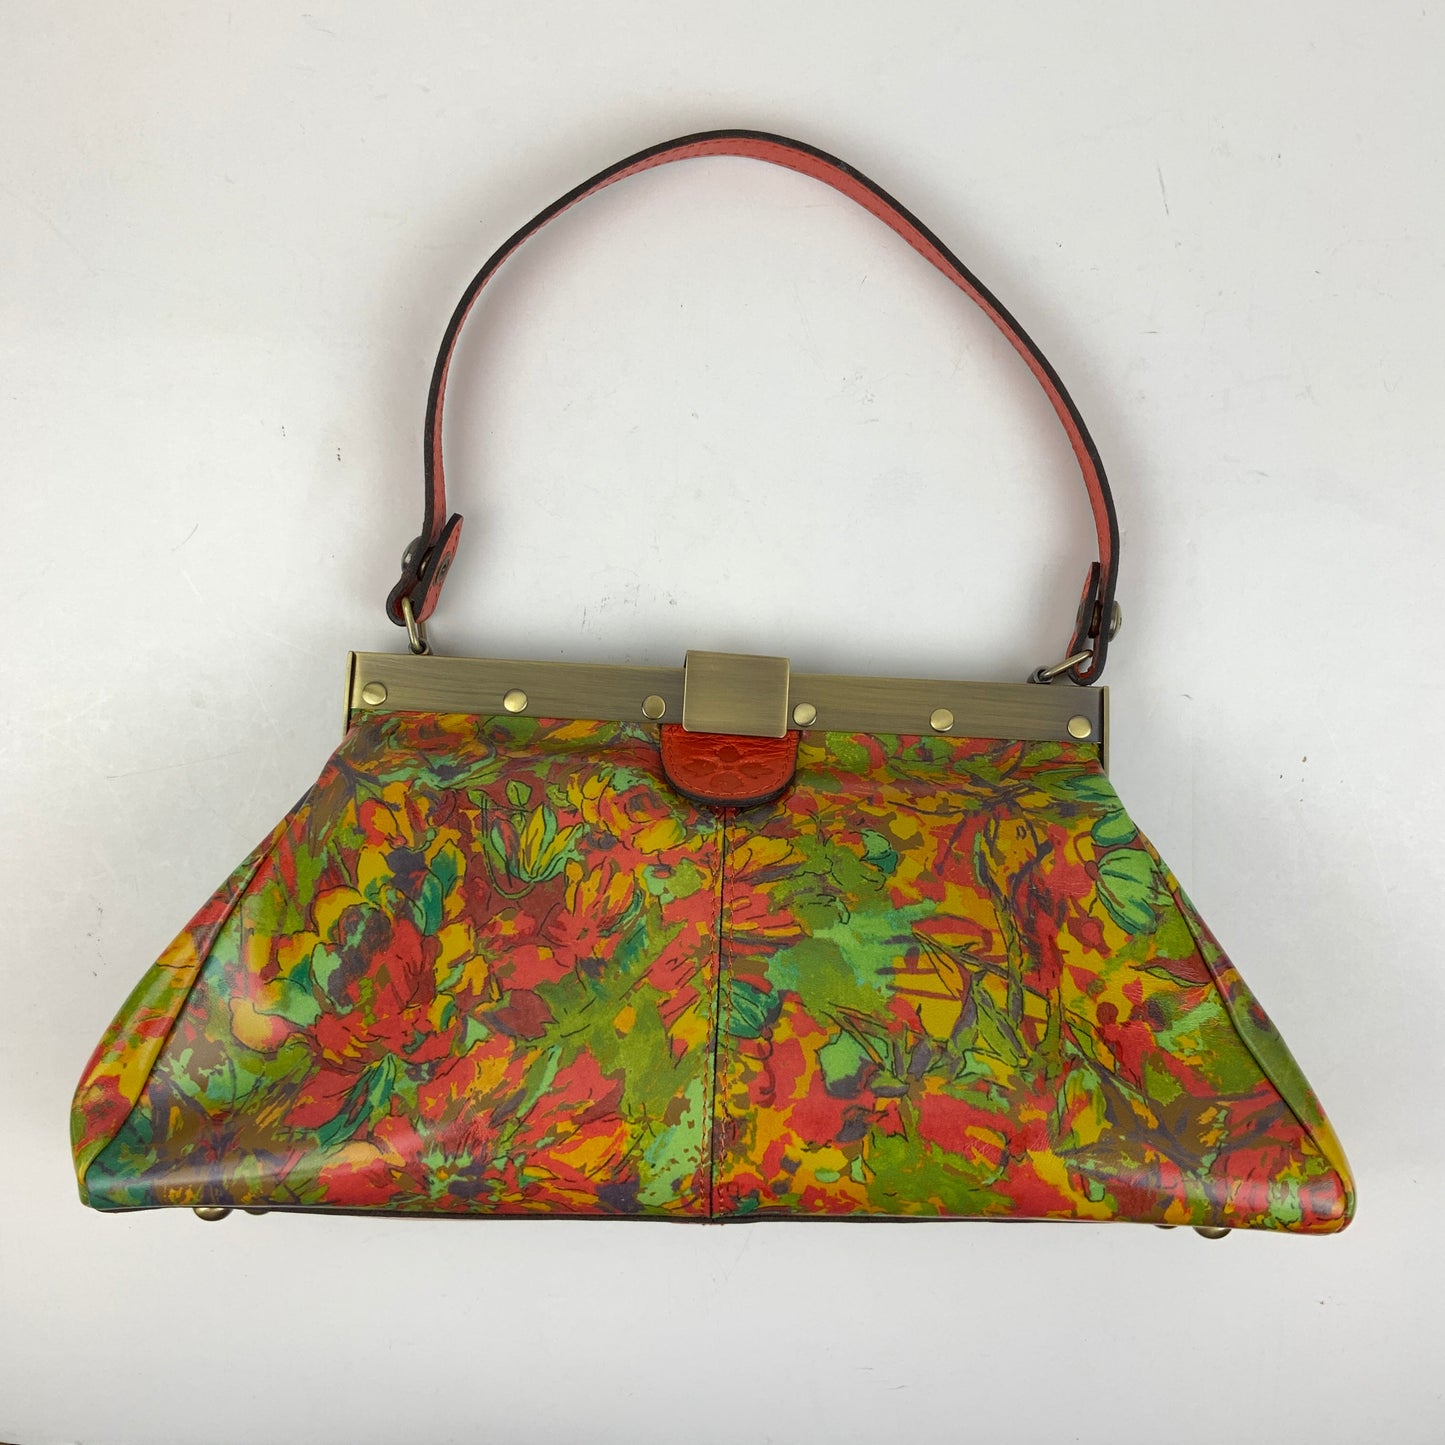 Handbag Designer Patricia Nash, Size Medium